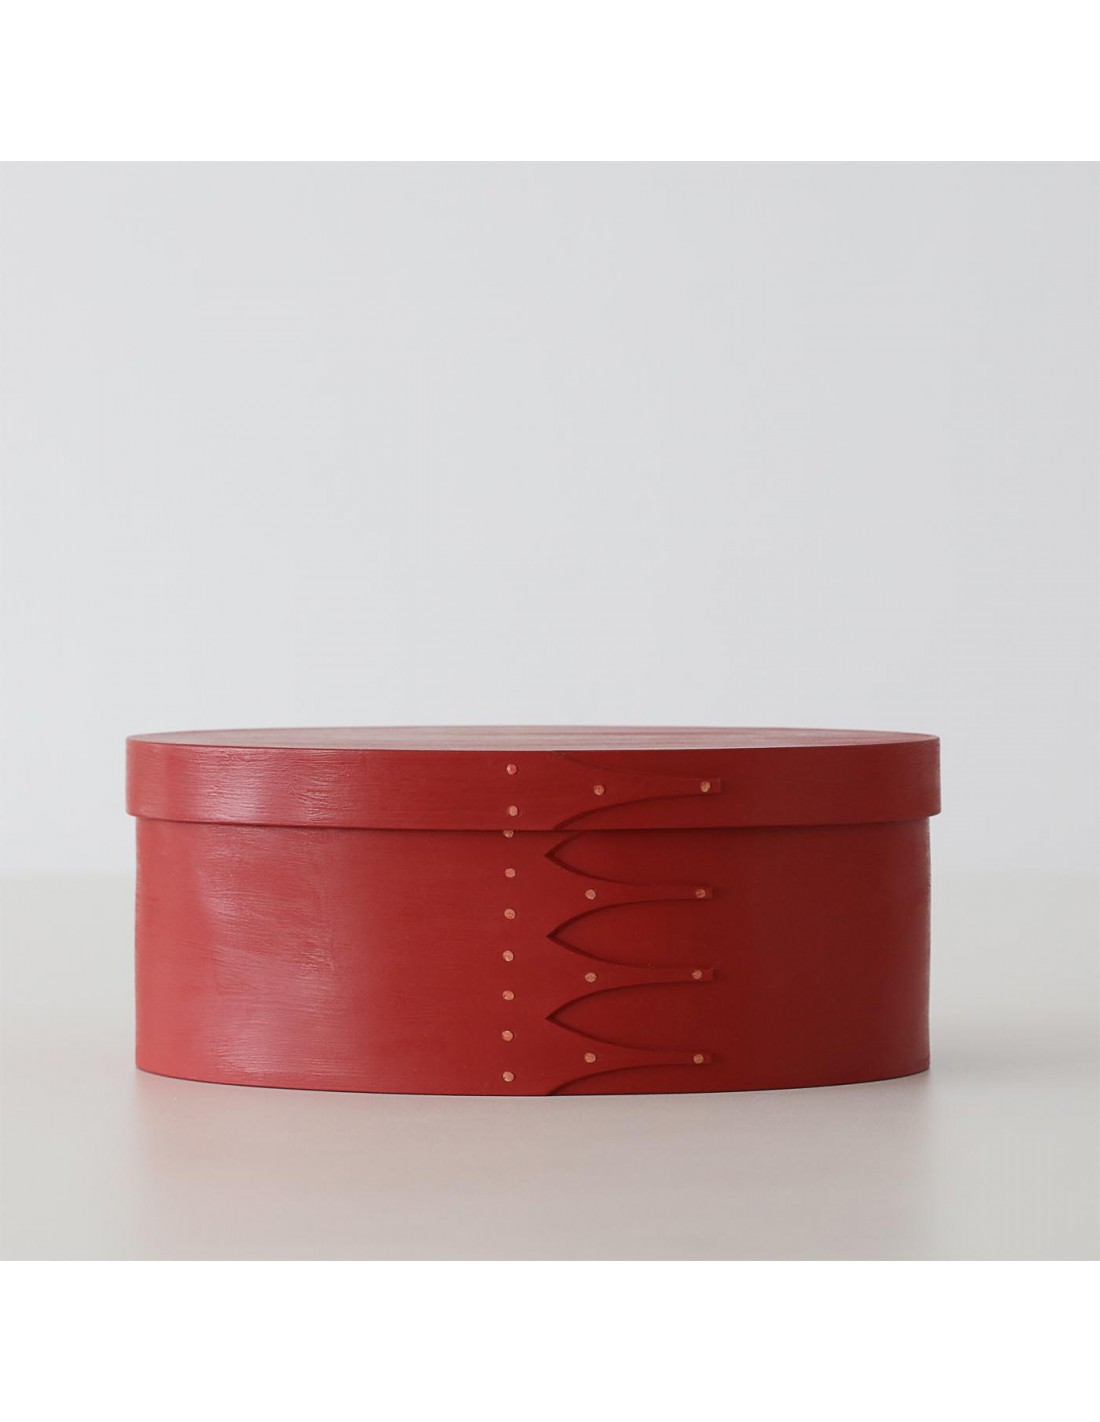 Handgefertigte Holzbox rot